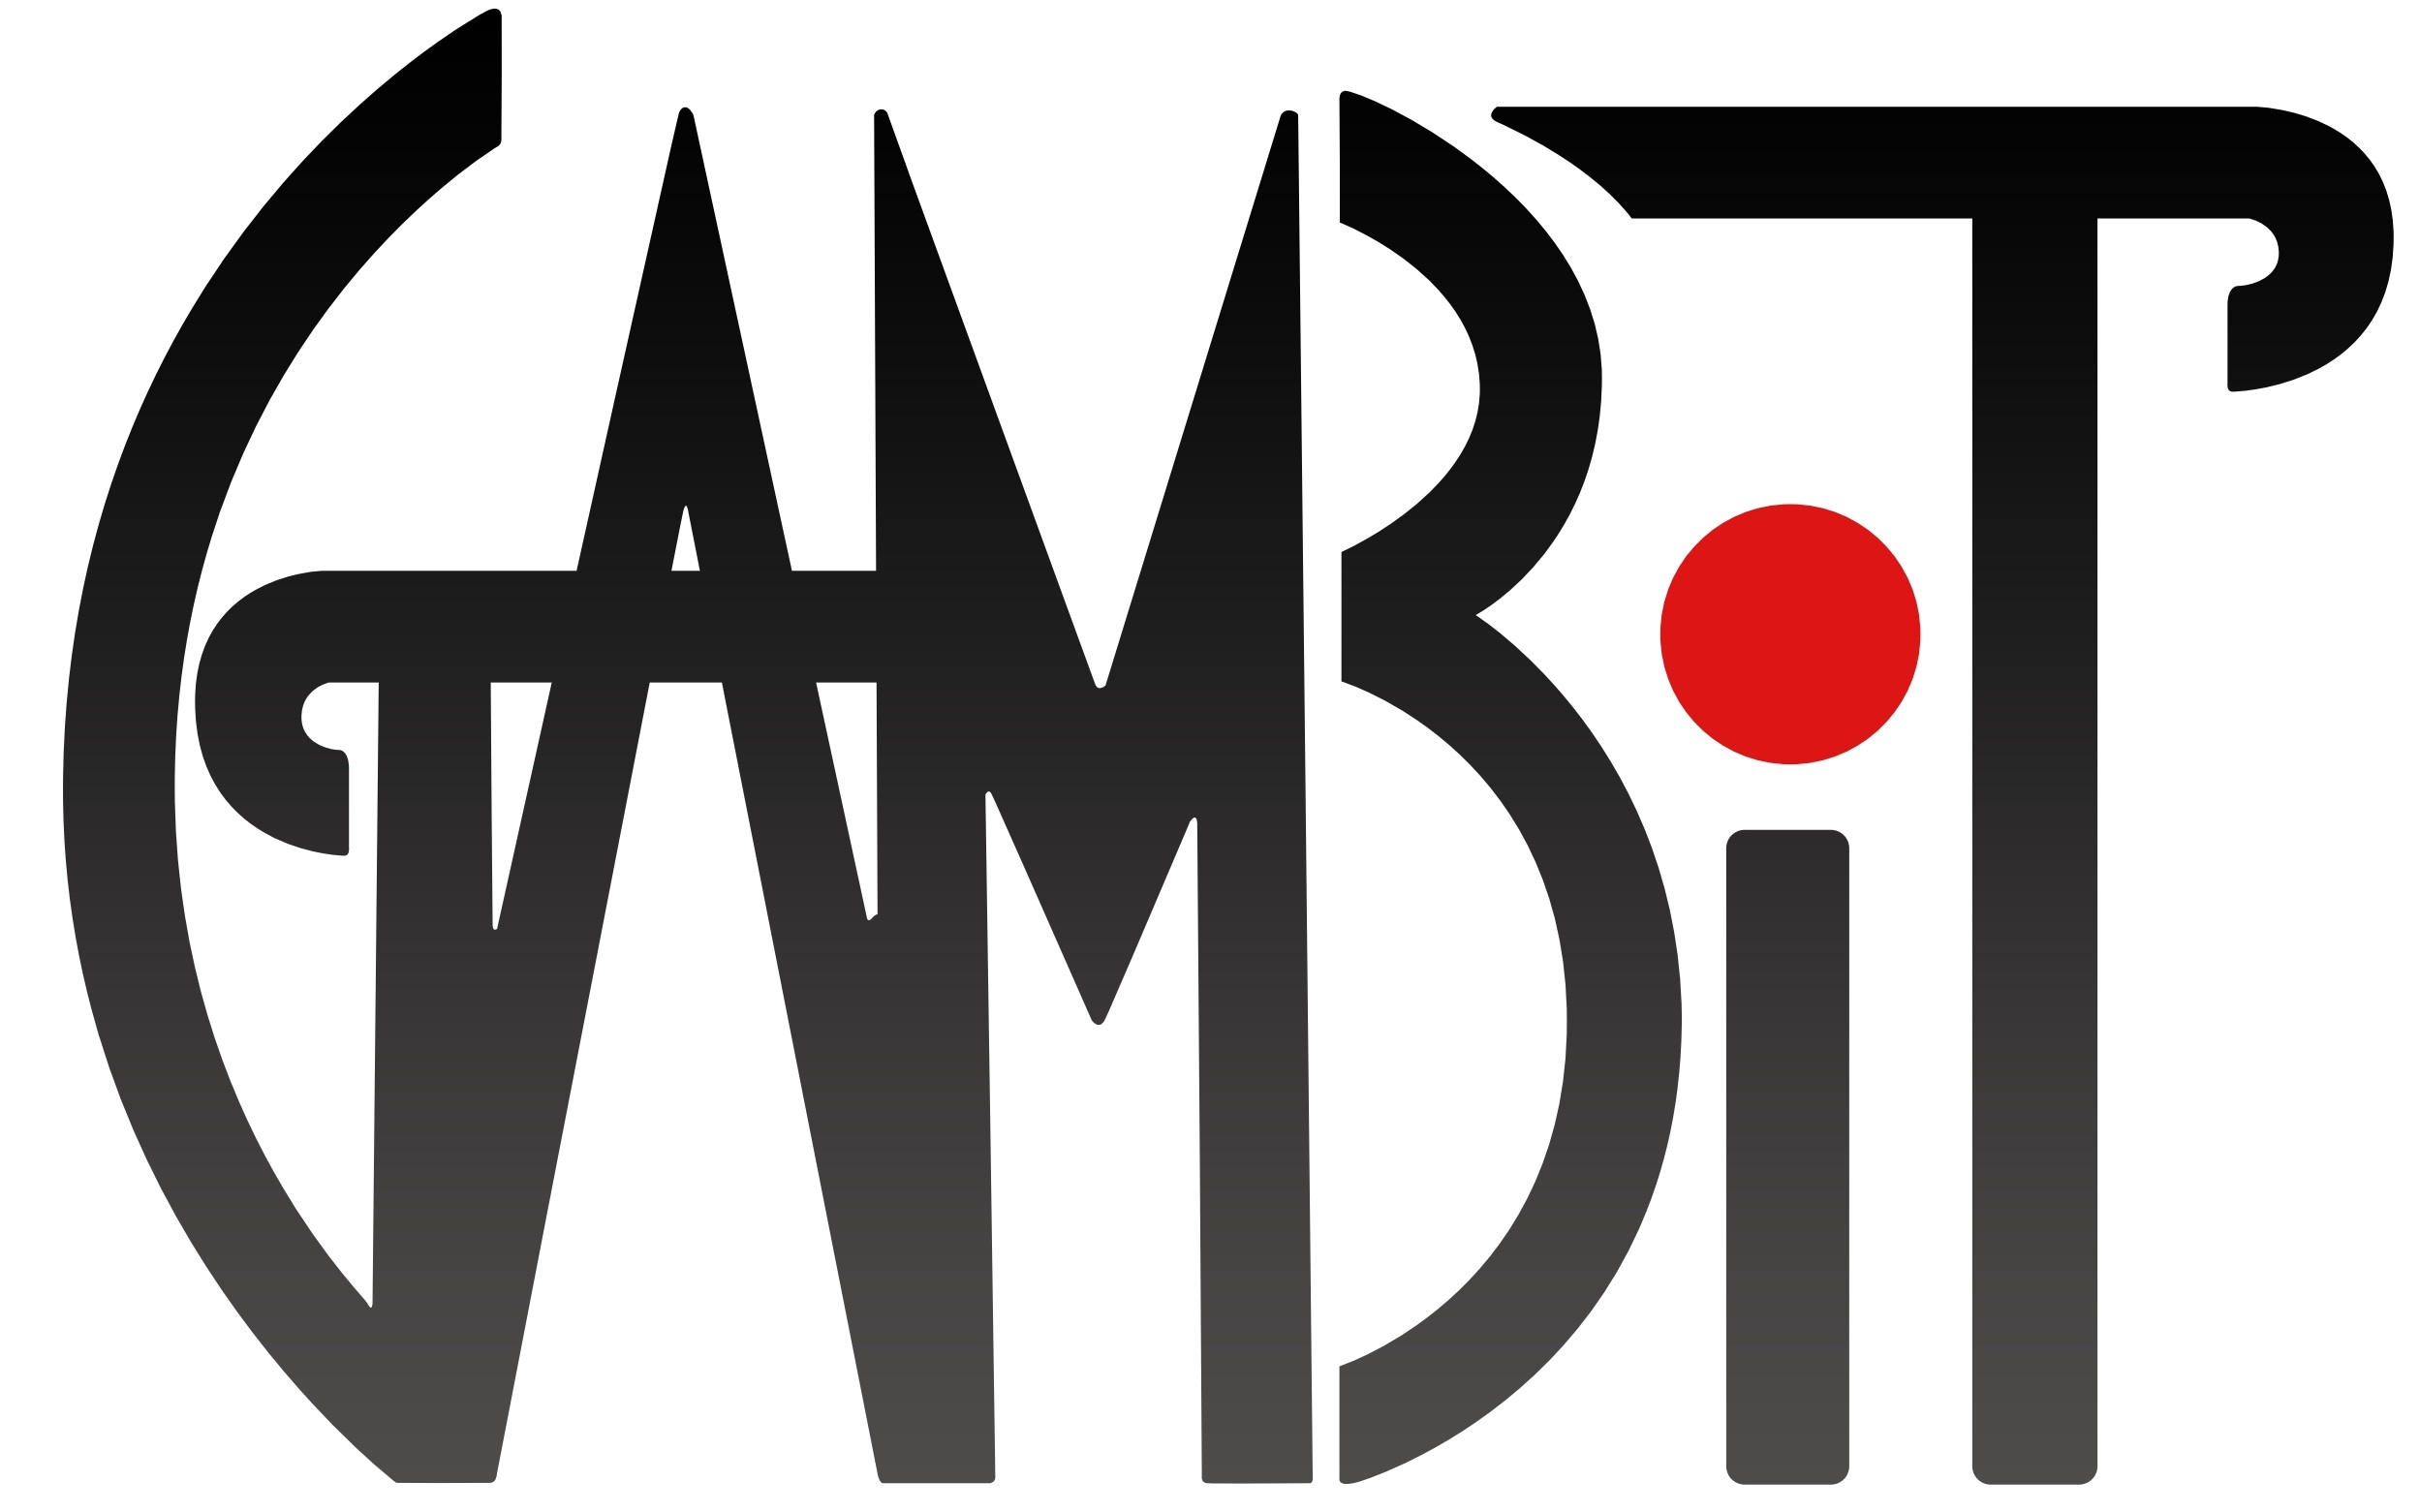 GAMBIT Logo.jpg d2876ceb1996e277ddbe95e4c2731827